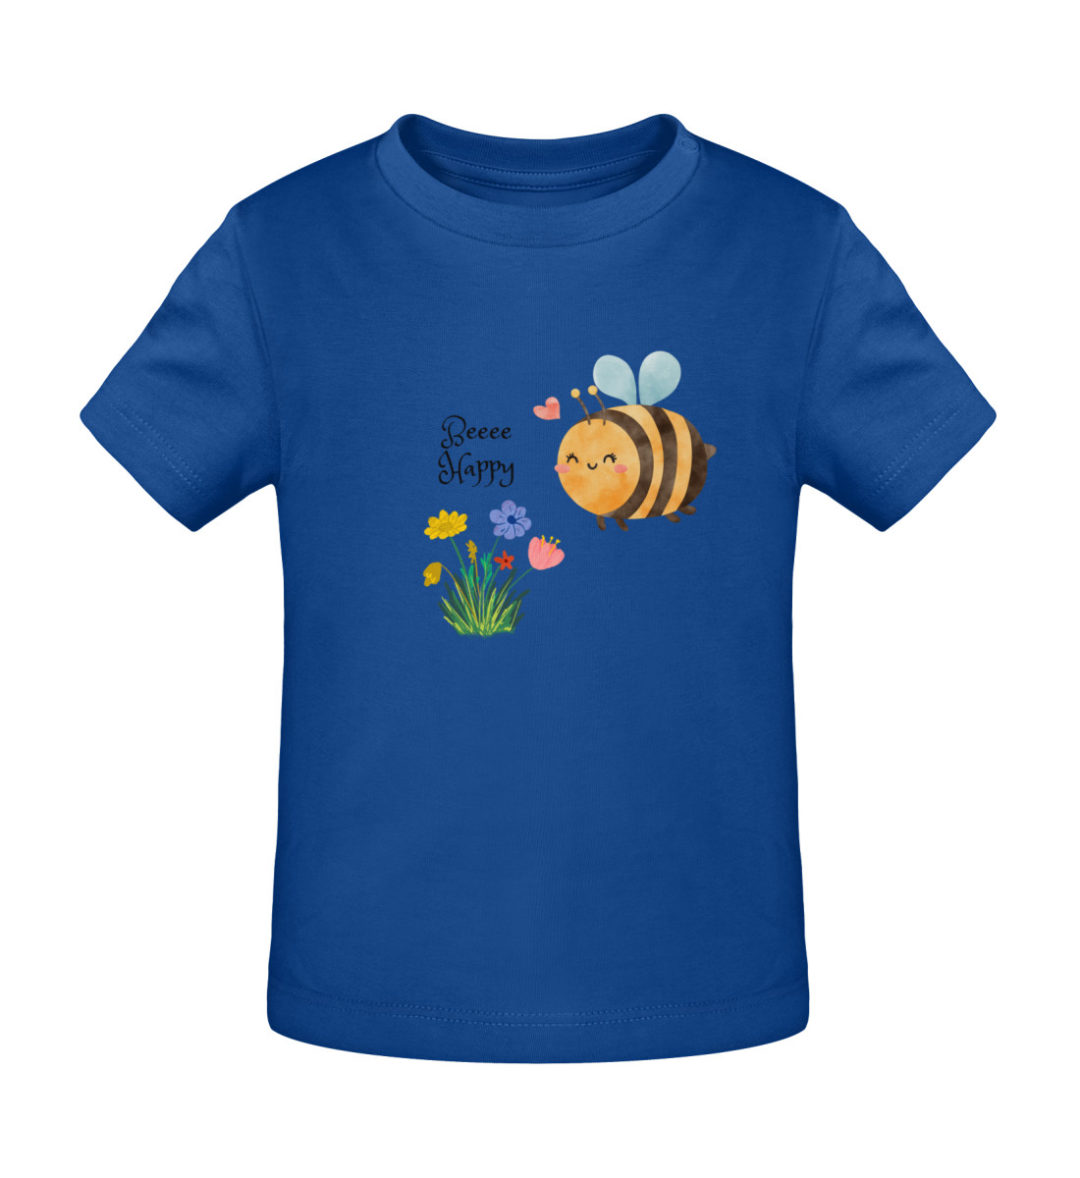 Beee happy - Baby Creator T-Shirt ST/ST-7106